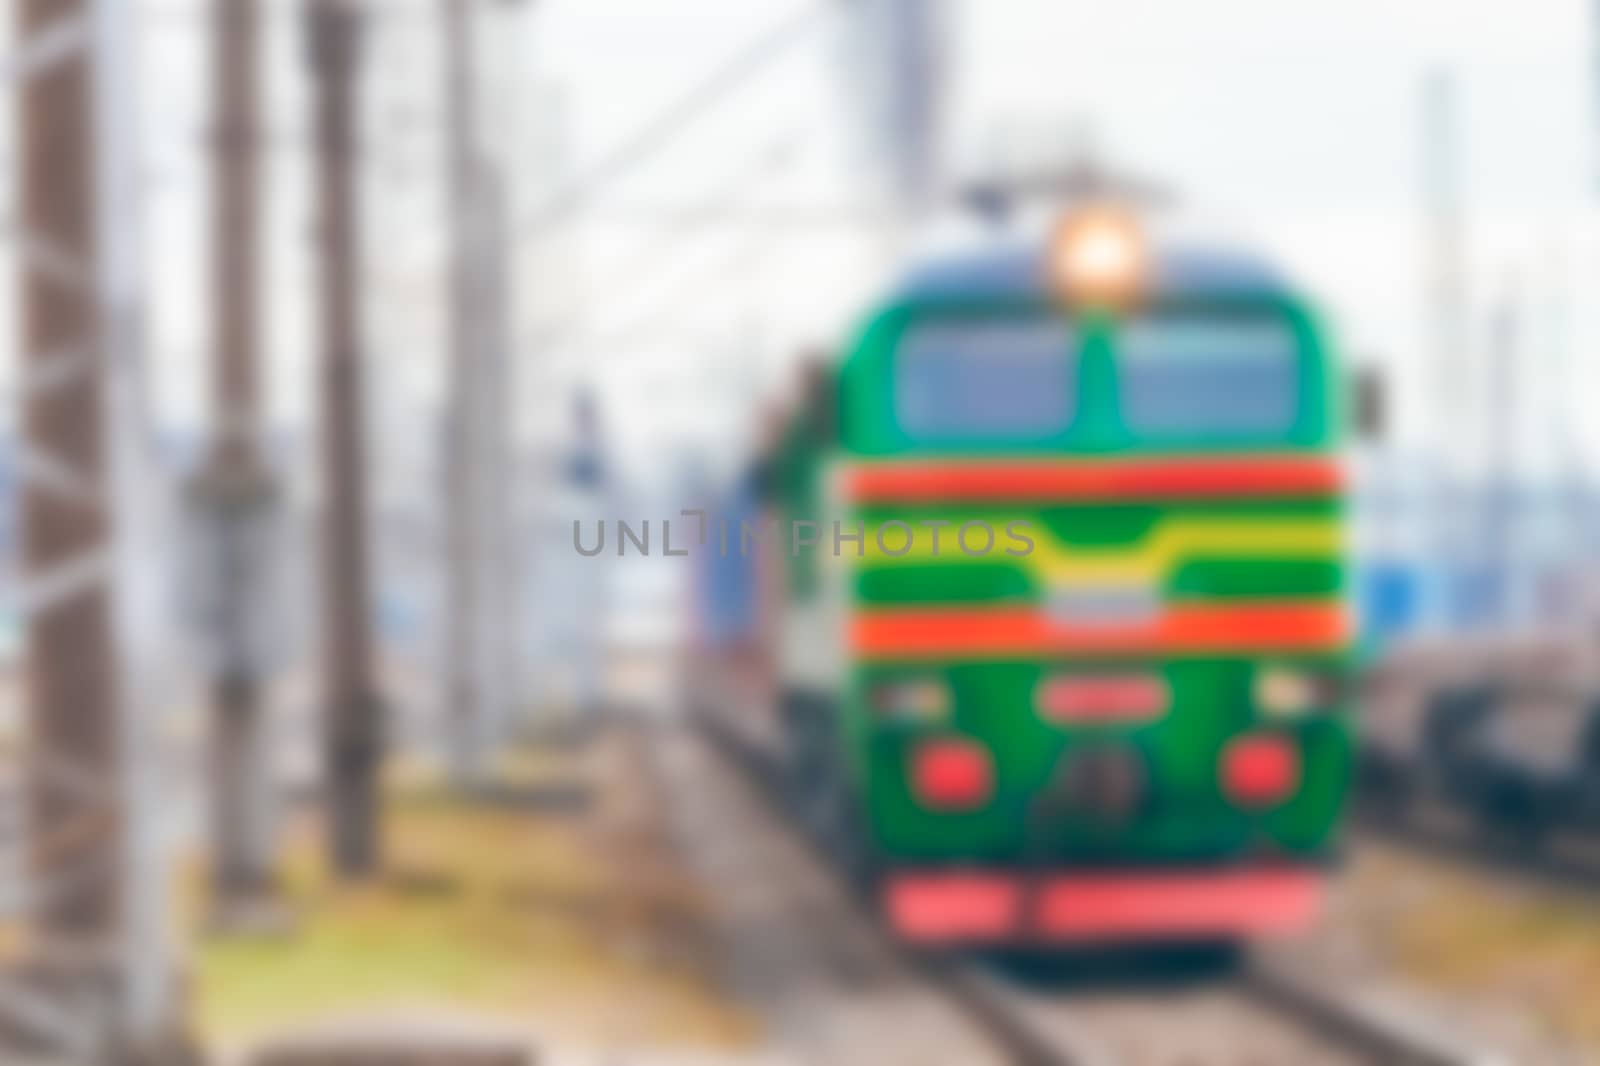 Freight train - soft lens bokeh image. Defocused background